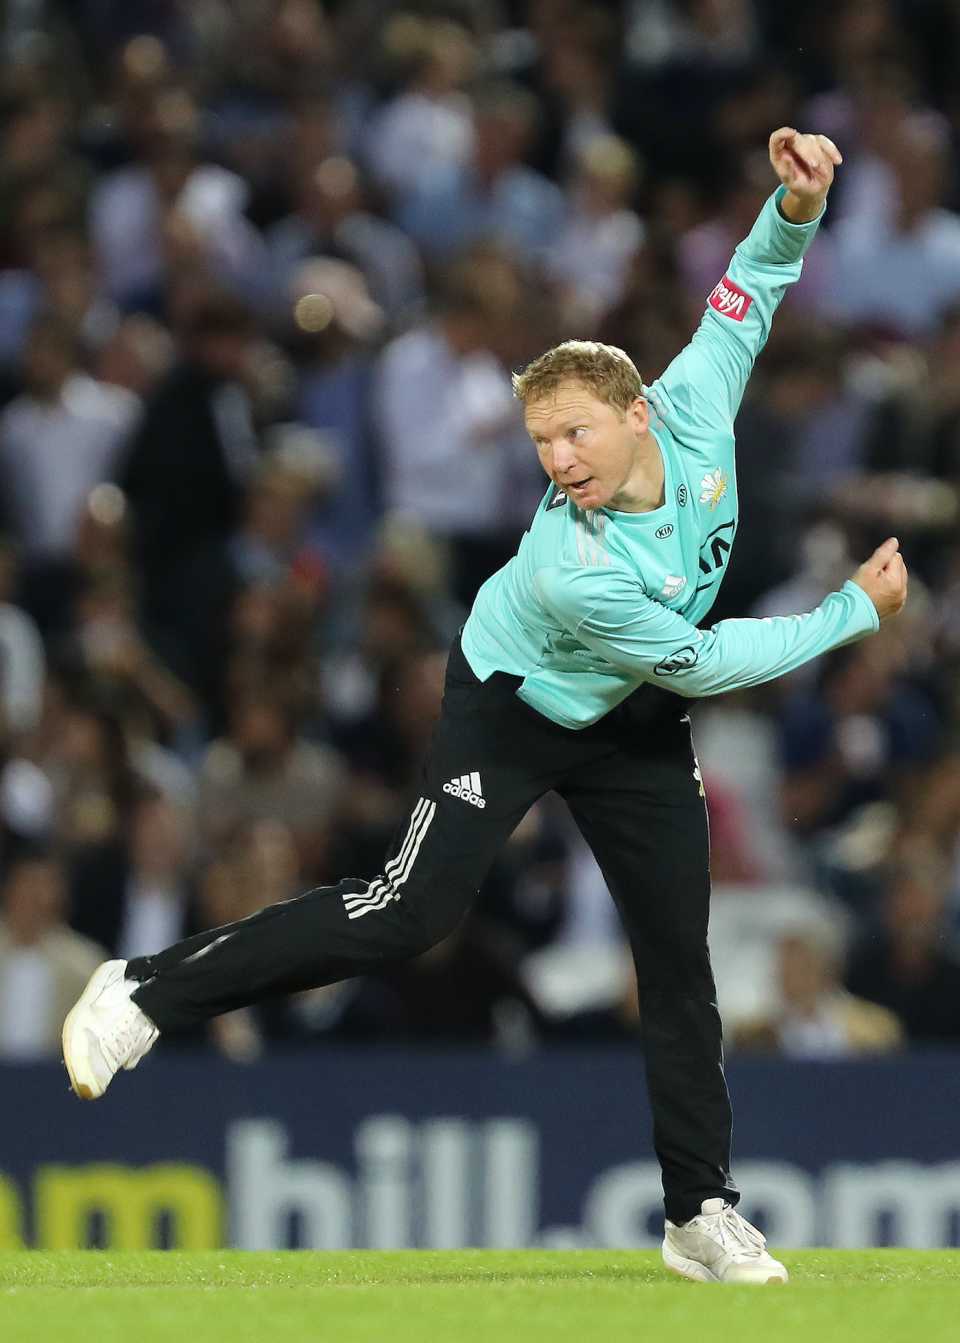 Gareth Batty bowls, Surrey vs Sussex, T20 Blast, the Oval, August 15, 2019